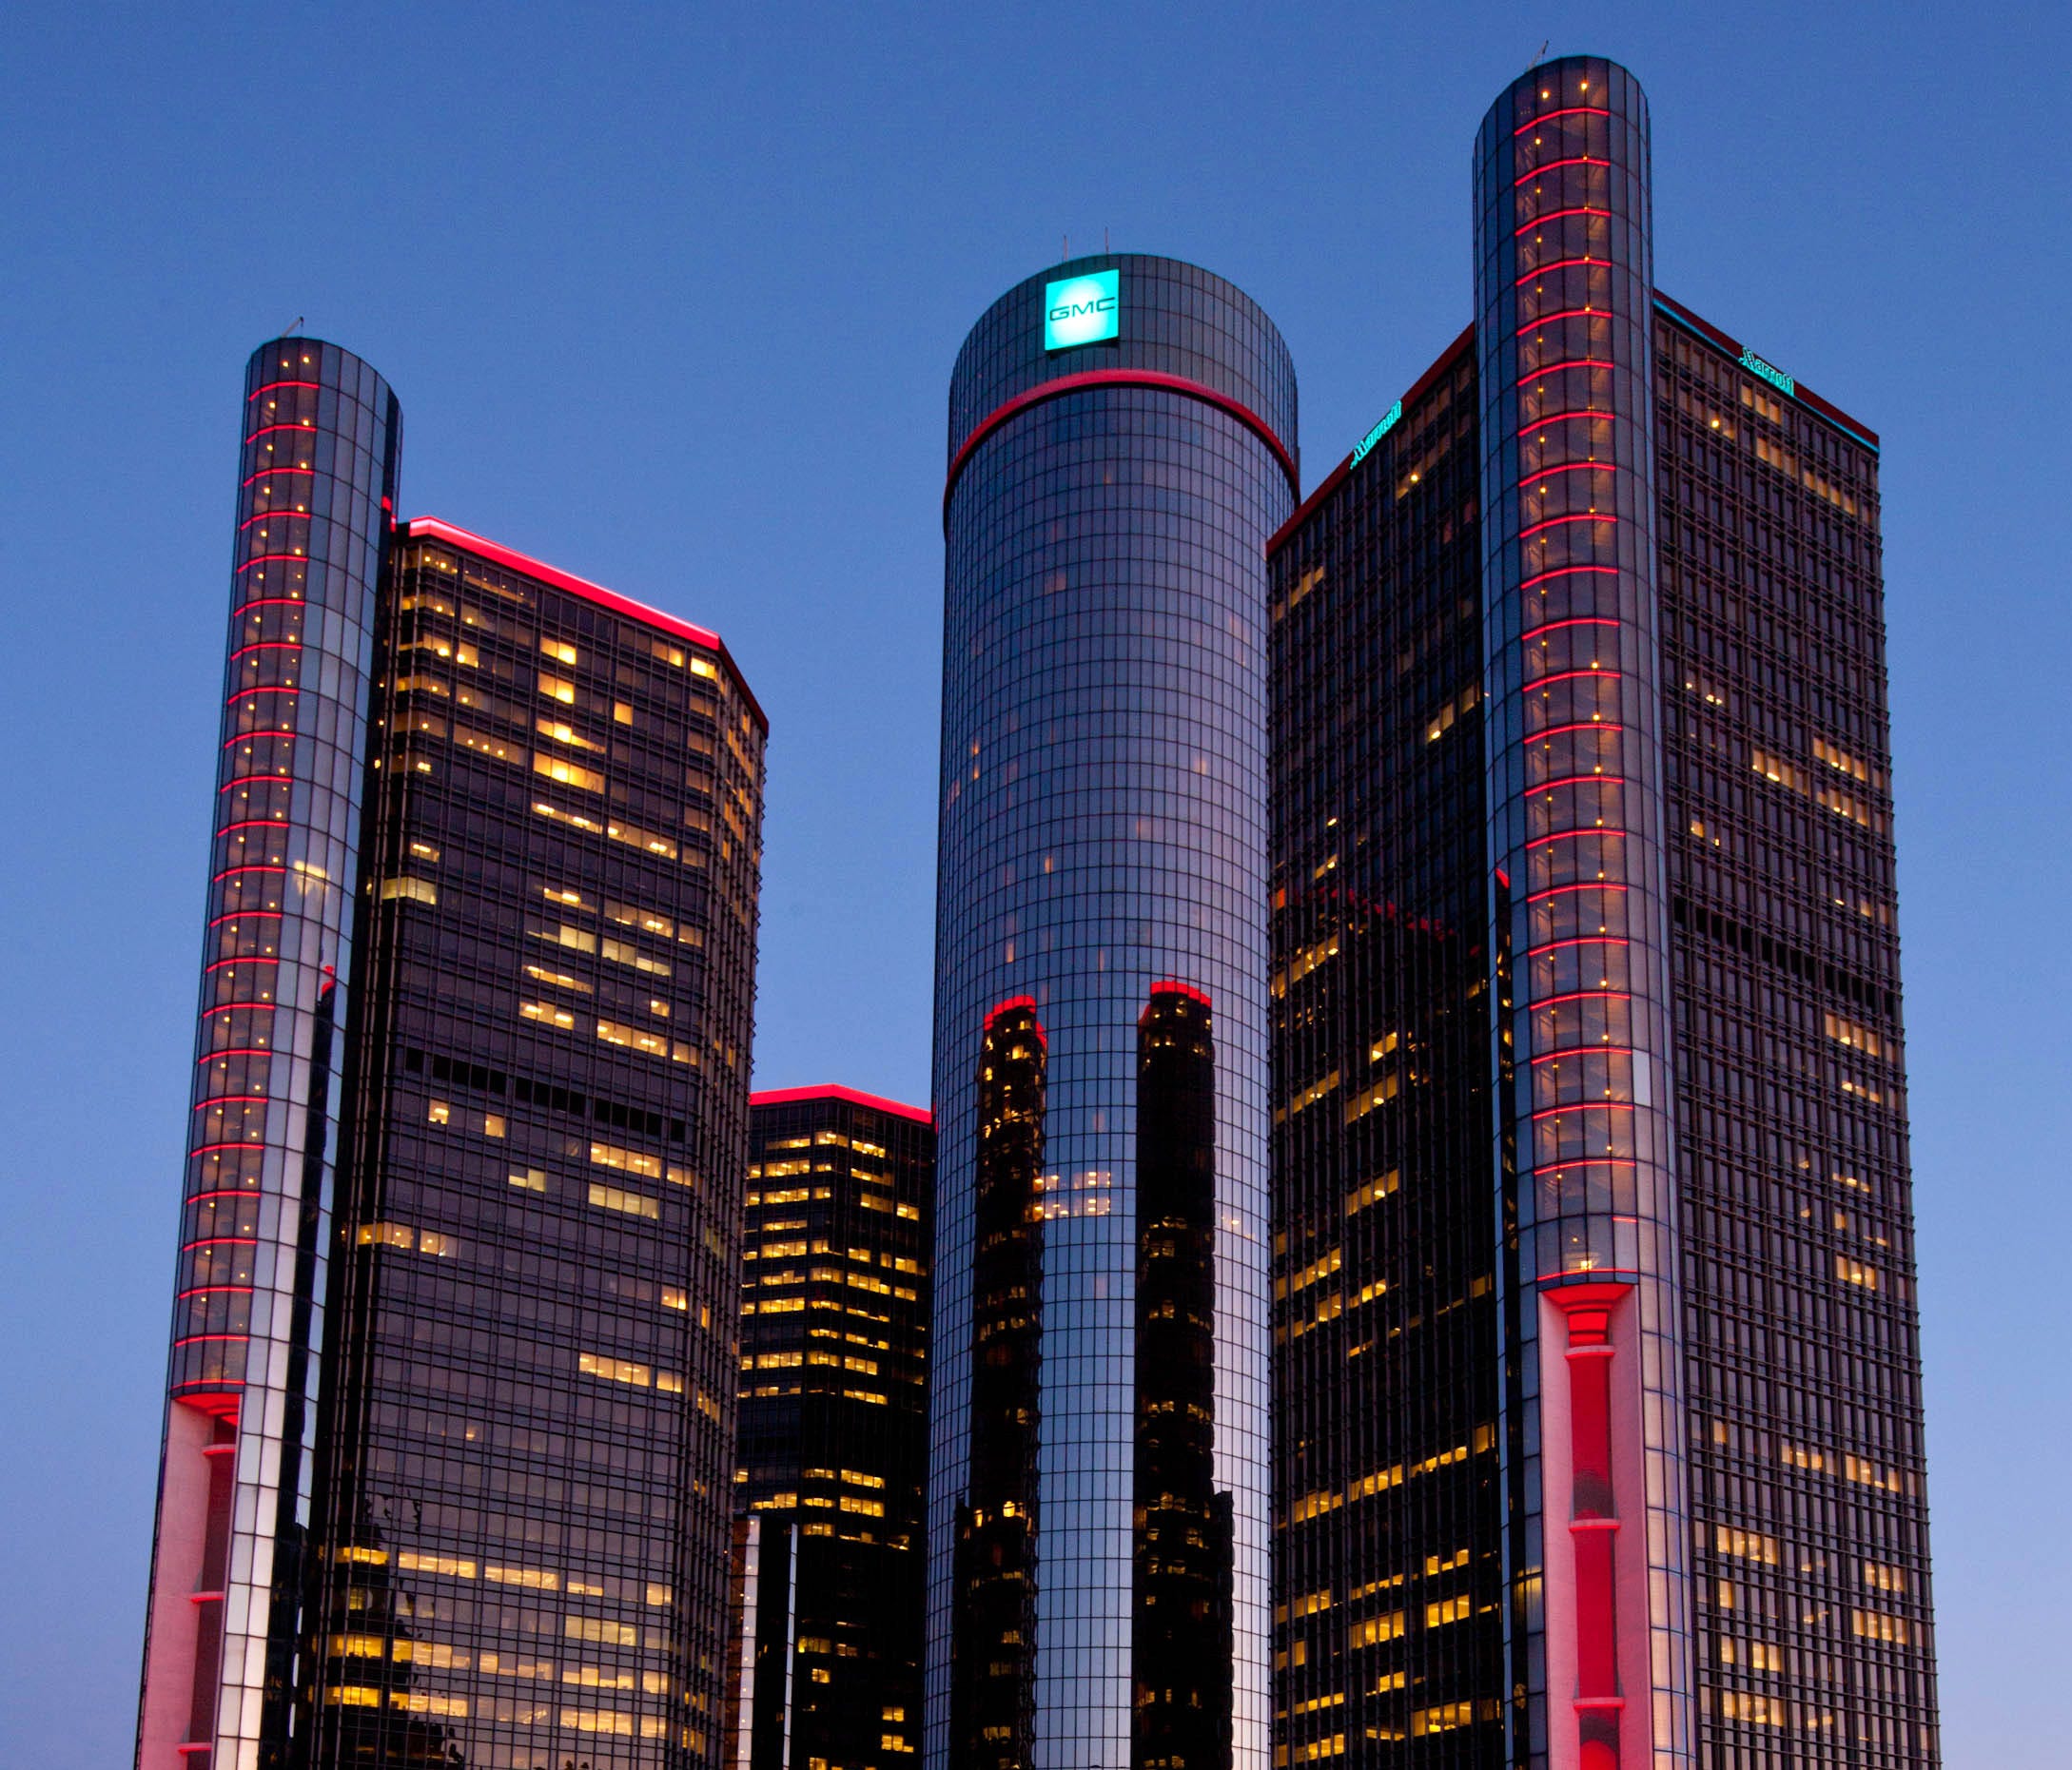 General Motors headquarters in the Renaissance Center in Detroit